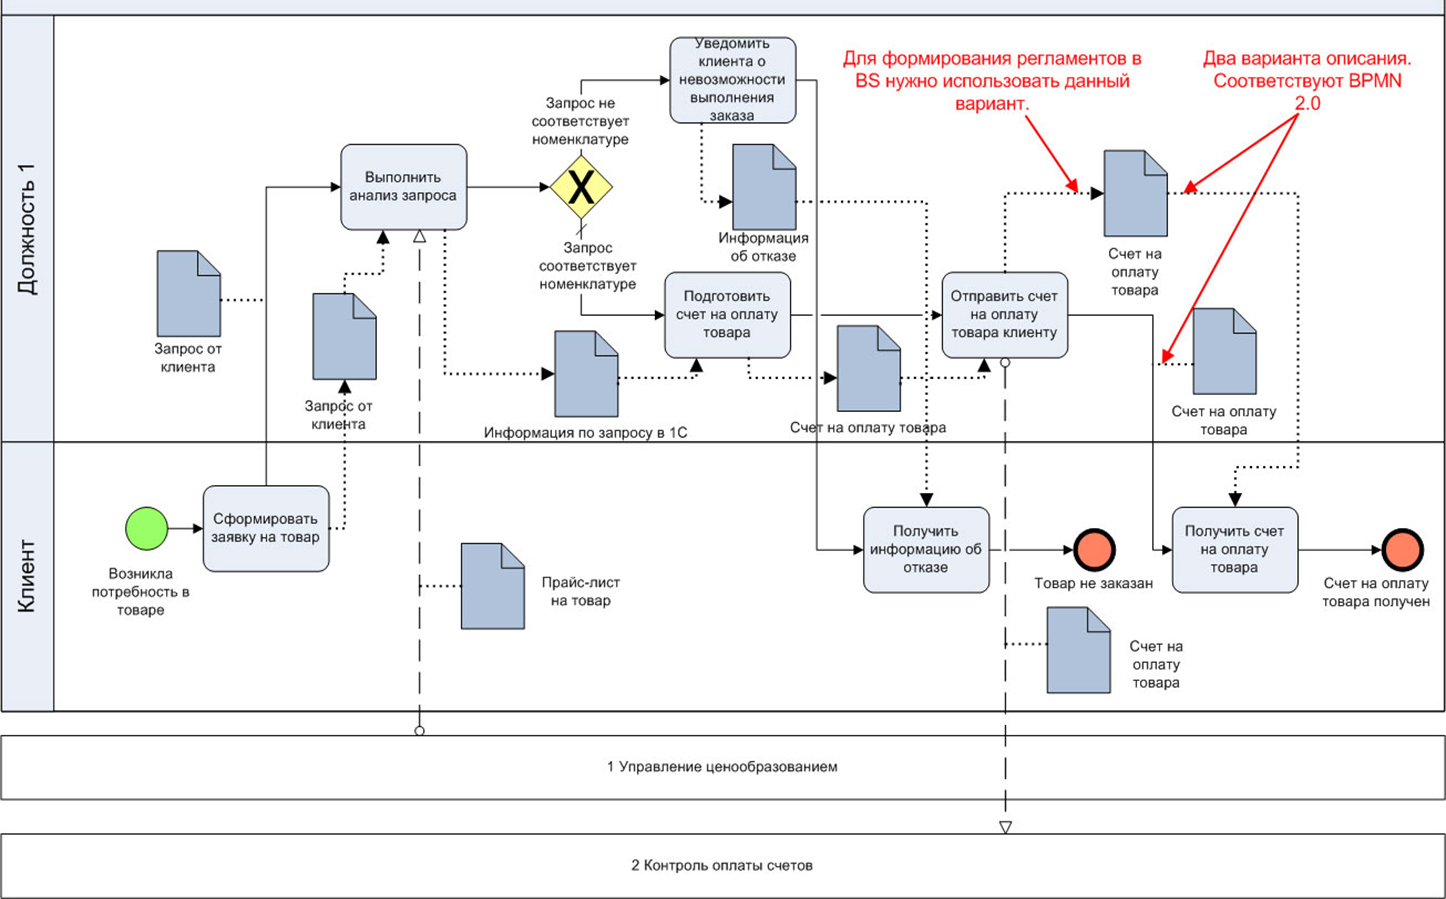 Заказ ис. Схема процесса в нотации BPMN. Диаграмма бизнес процессов BPMN 2.0. Схема бизнес процесса в нотации BPMN. Бизнес процесс BPMN 2.0.